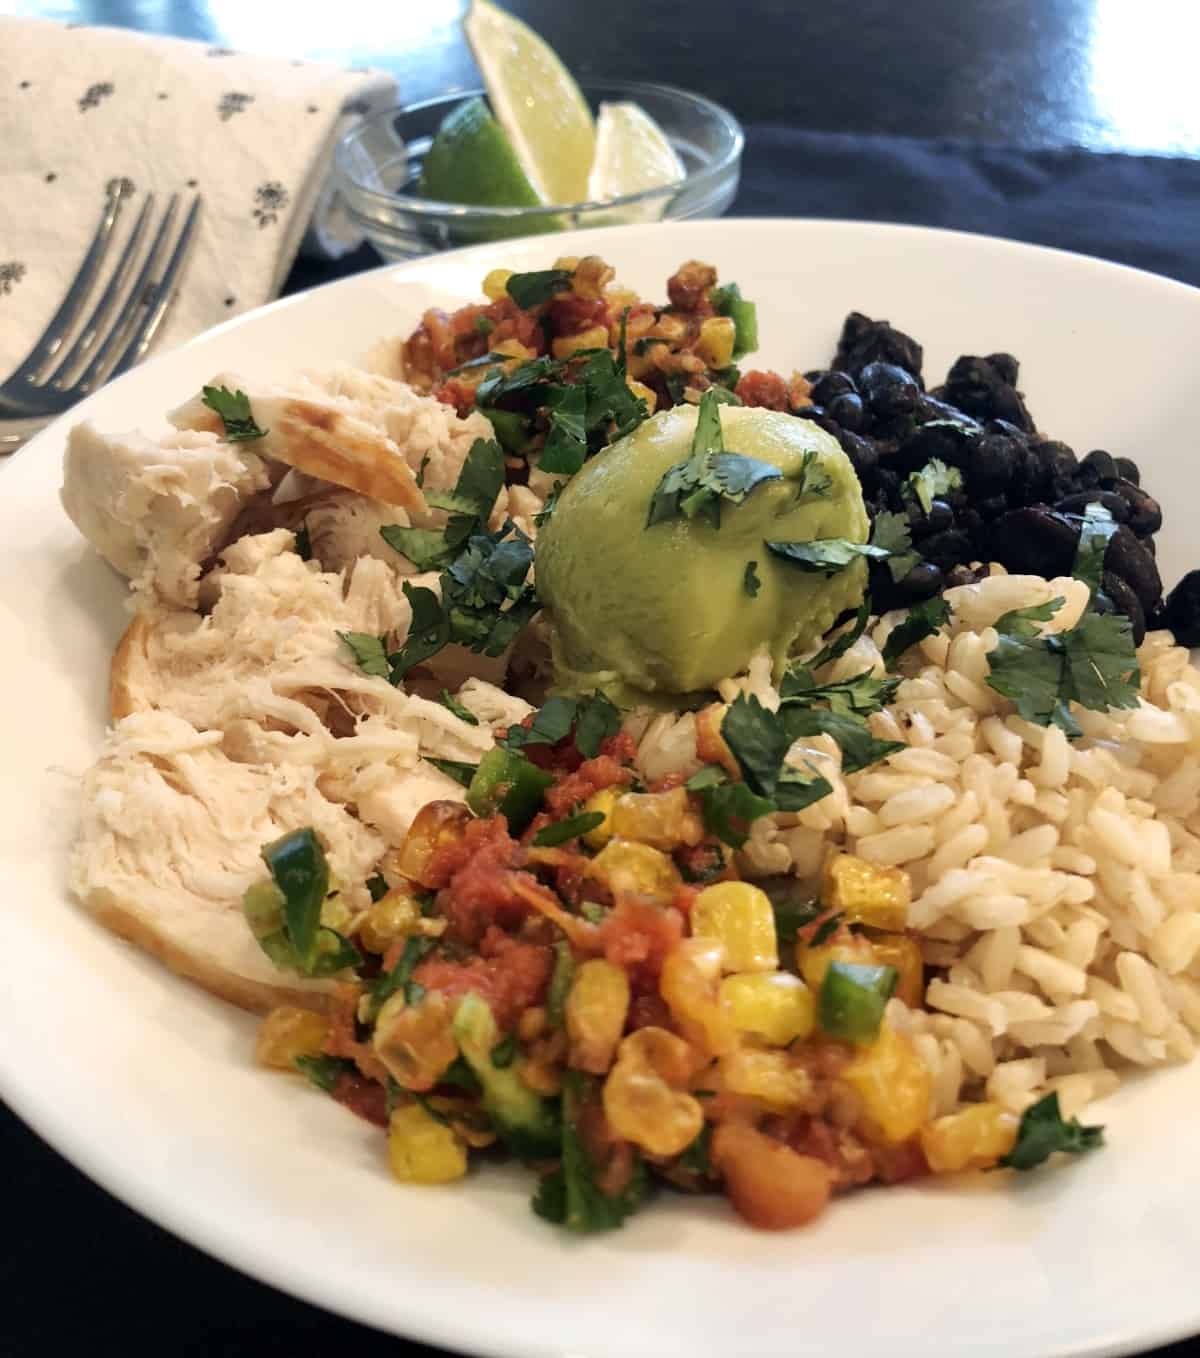 Burrito bowl with chicken, black beans, rice, corn salsa, and guacamole.